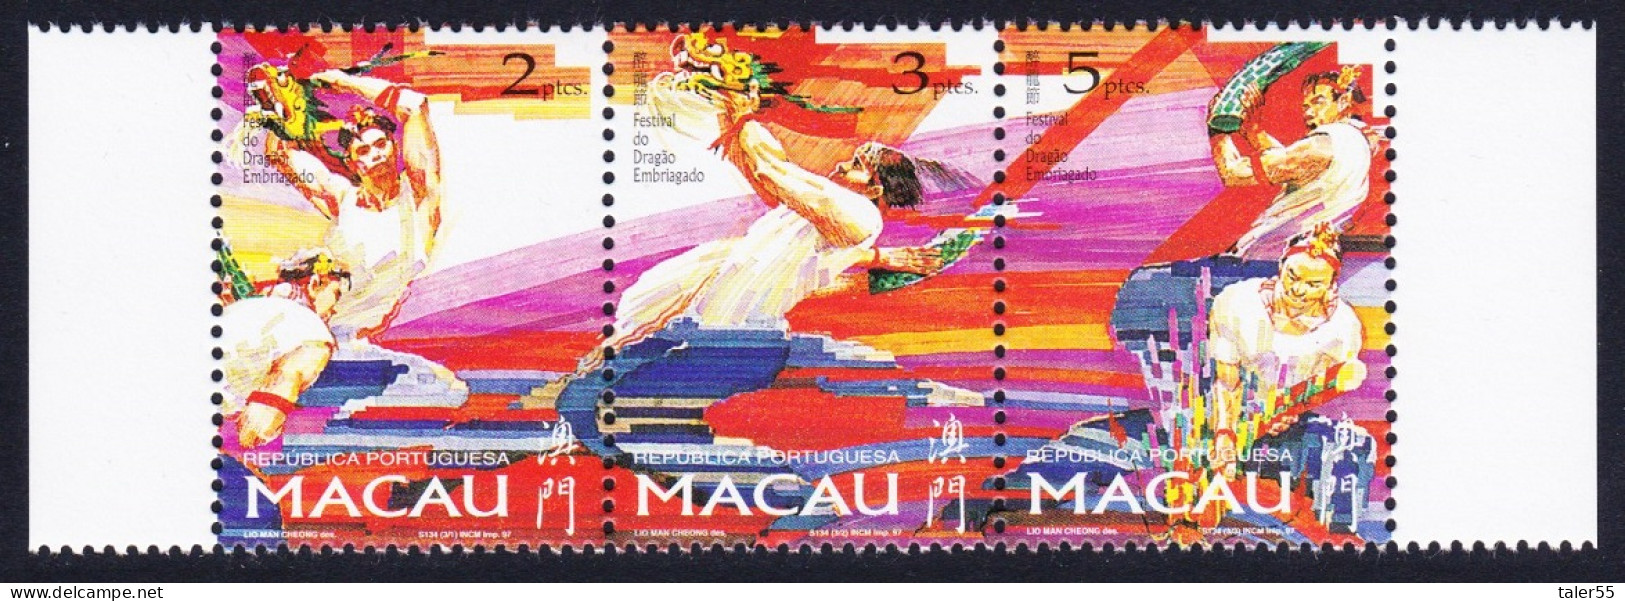 Macao Macau Drunken Dragon Festival Strip Of 3v 1997 MNH SG#988-990 MI#913-915 Sc#876a - Unused Stamps